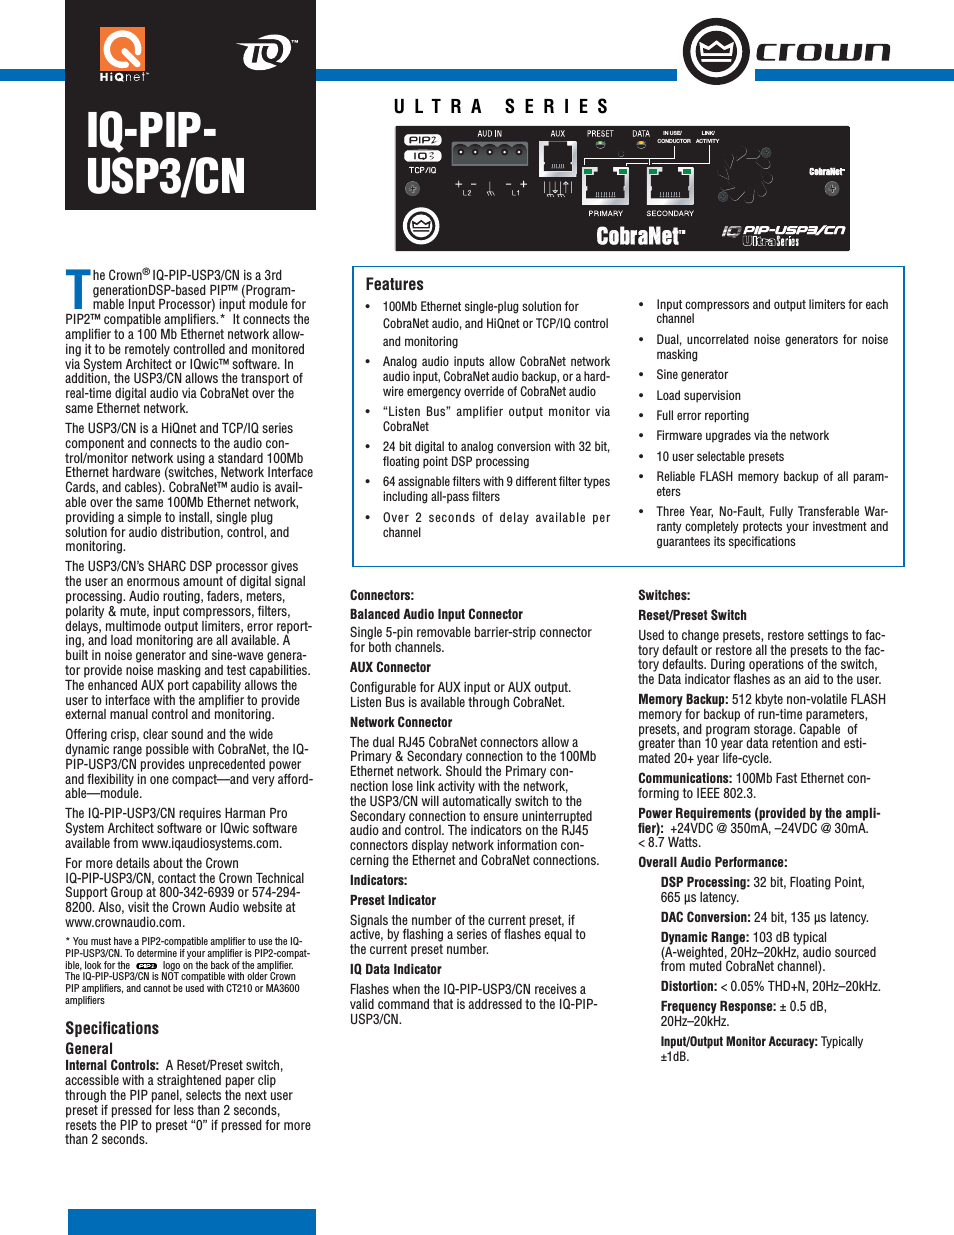 IQ-PIP USP3/CN